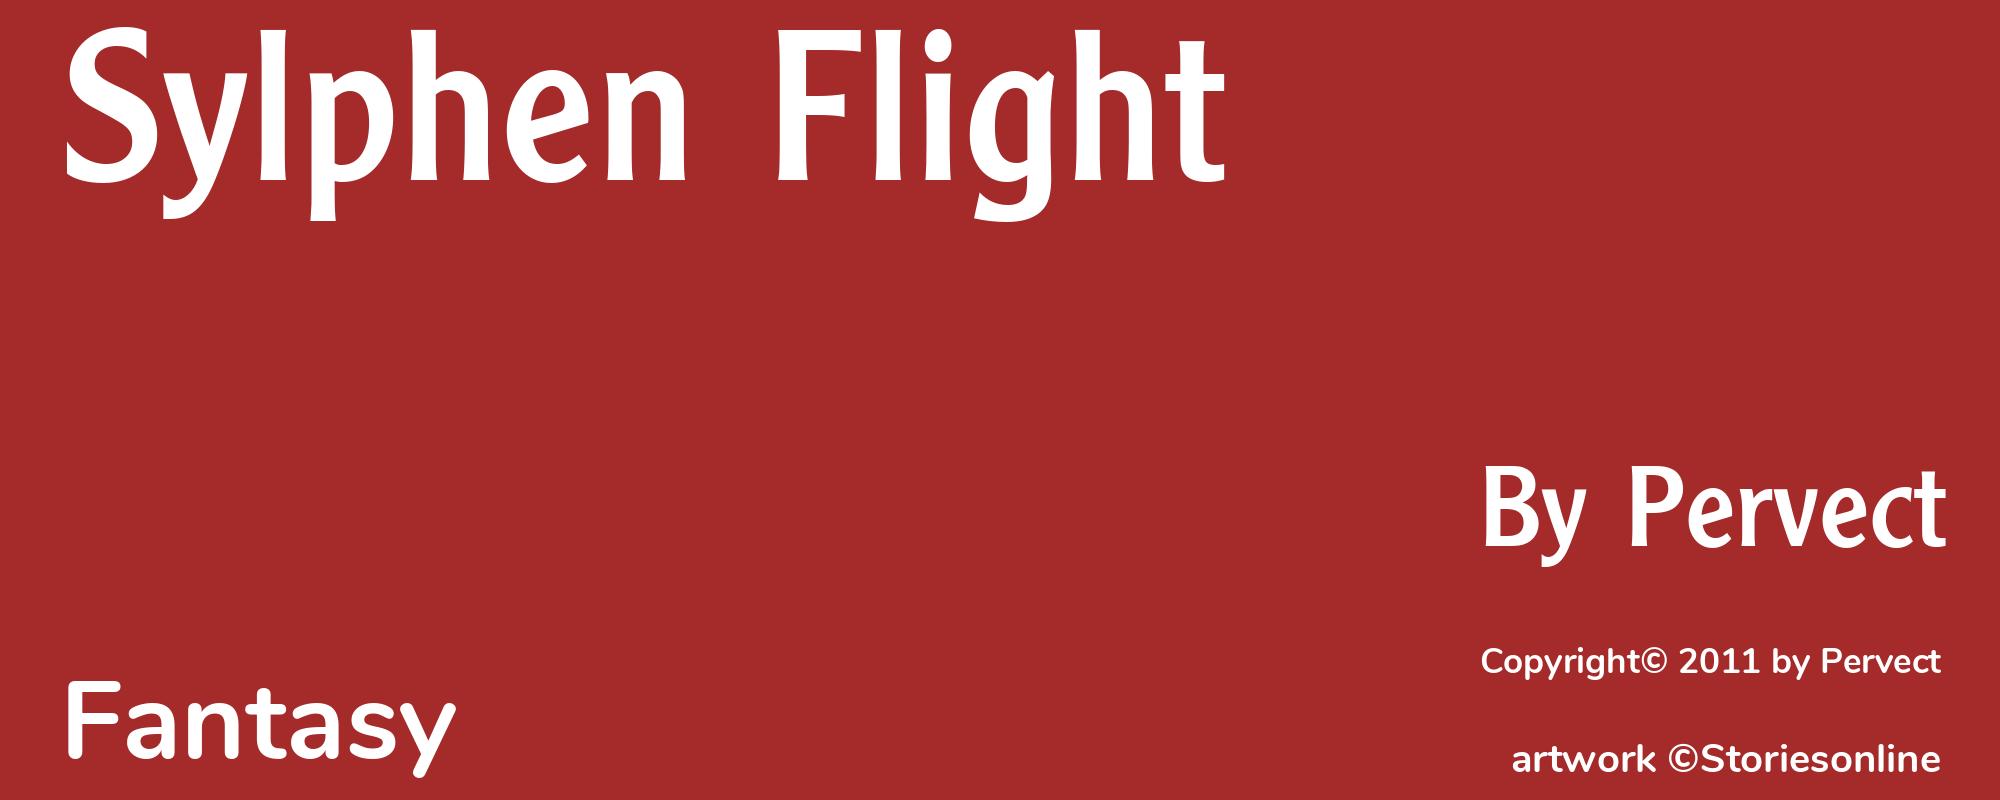 Sylphen Flight - Cover